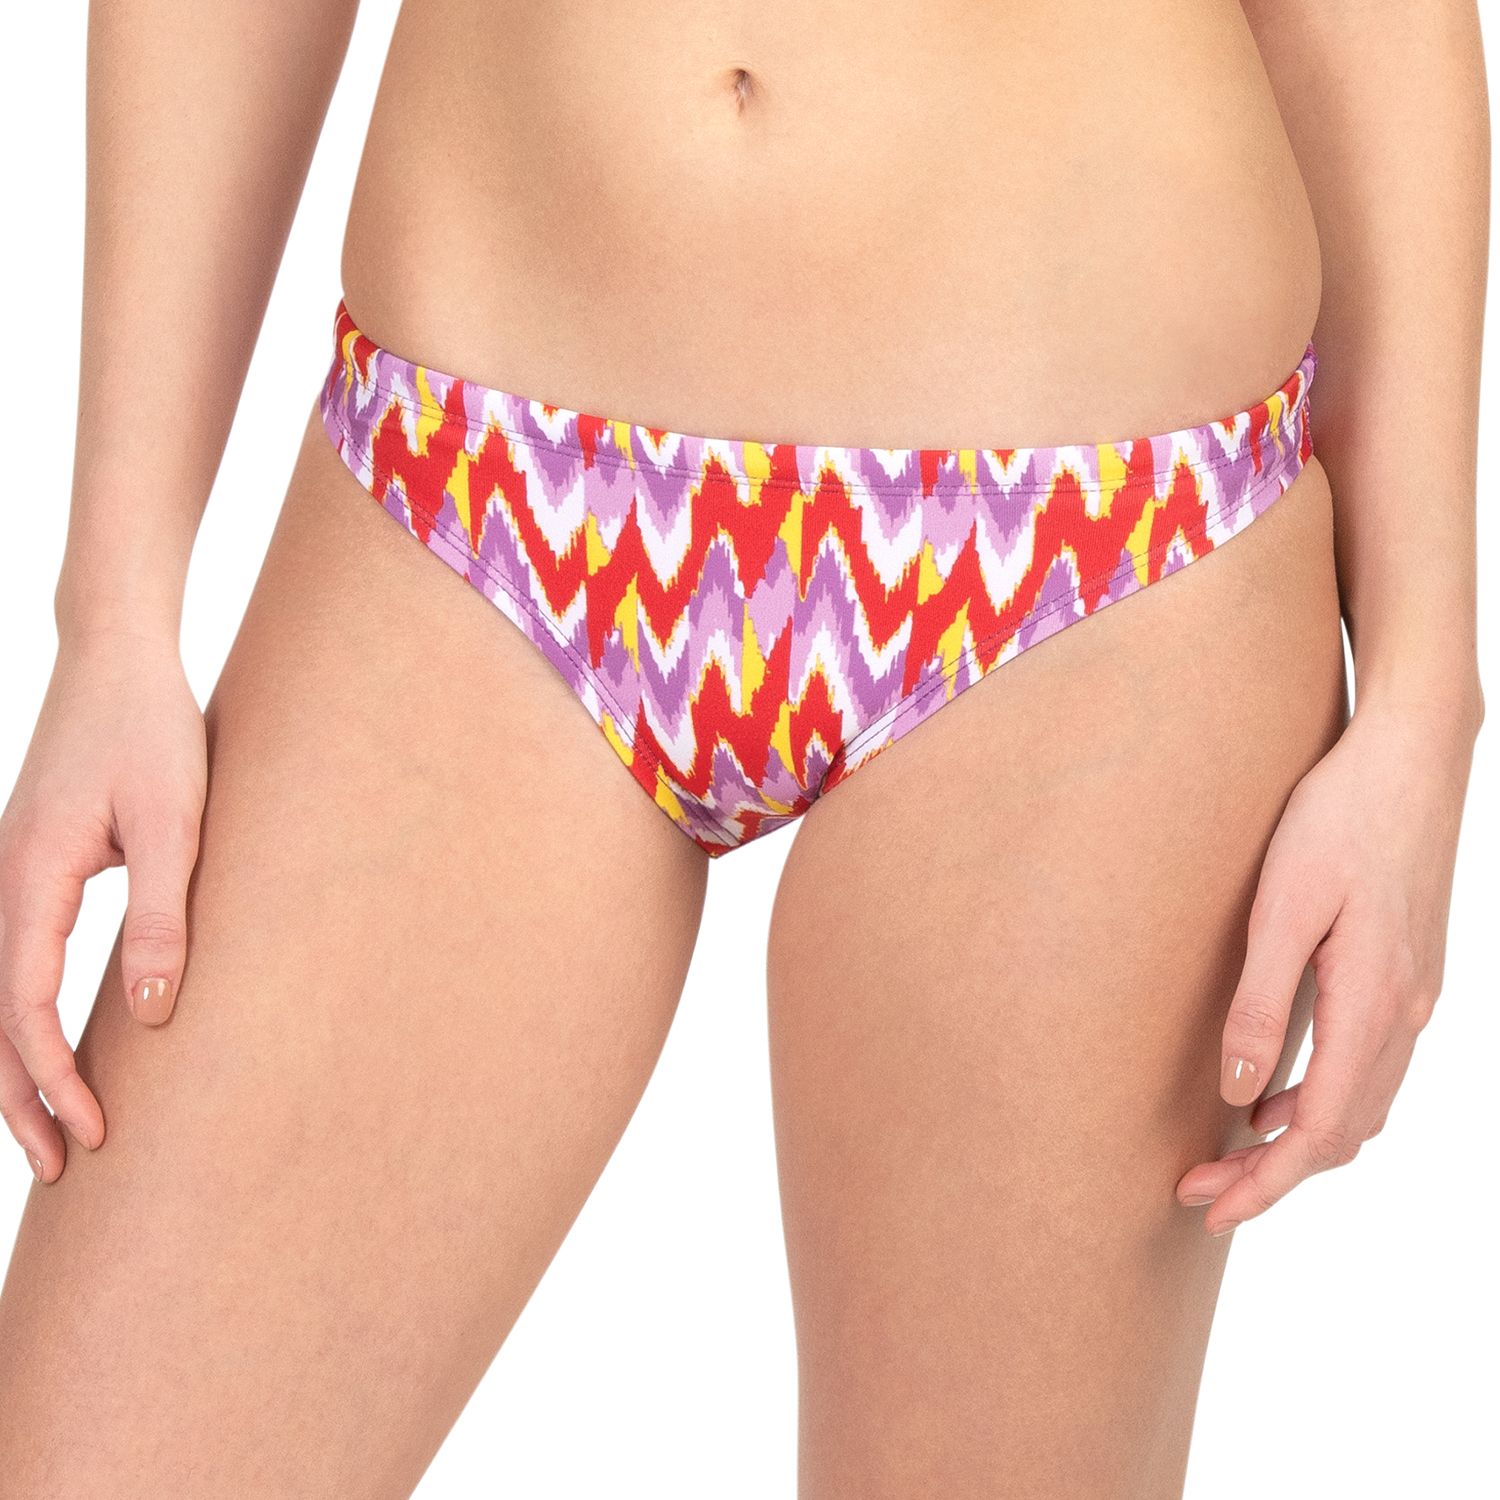 Image for Dolfin Women's Revibe Print Low-Rise Bikini Bottoms at Kohl's.